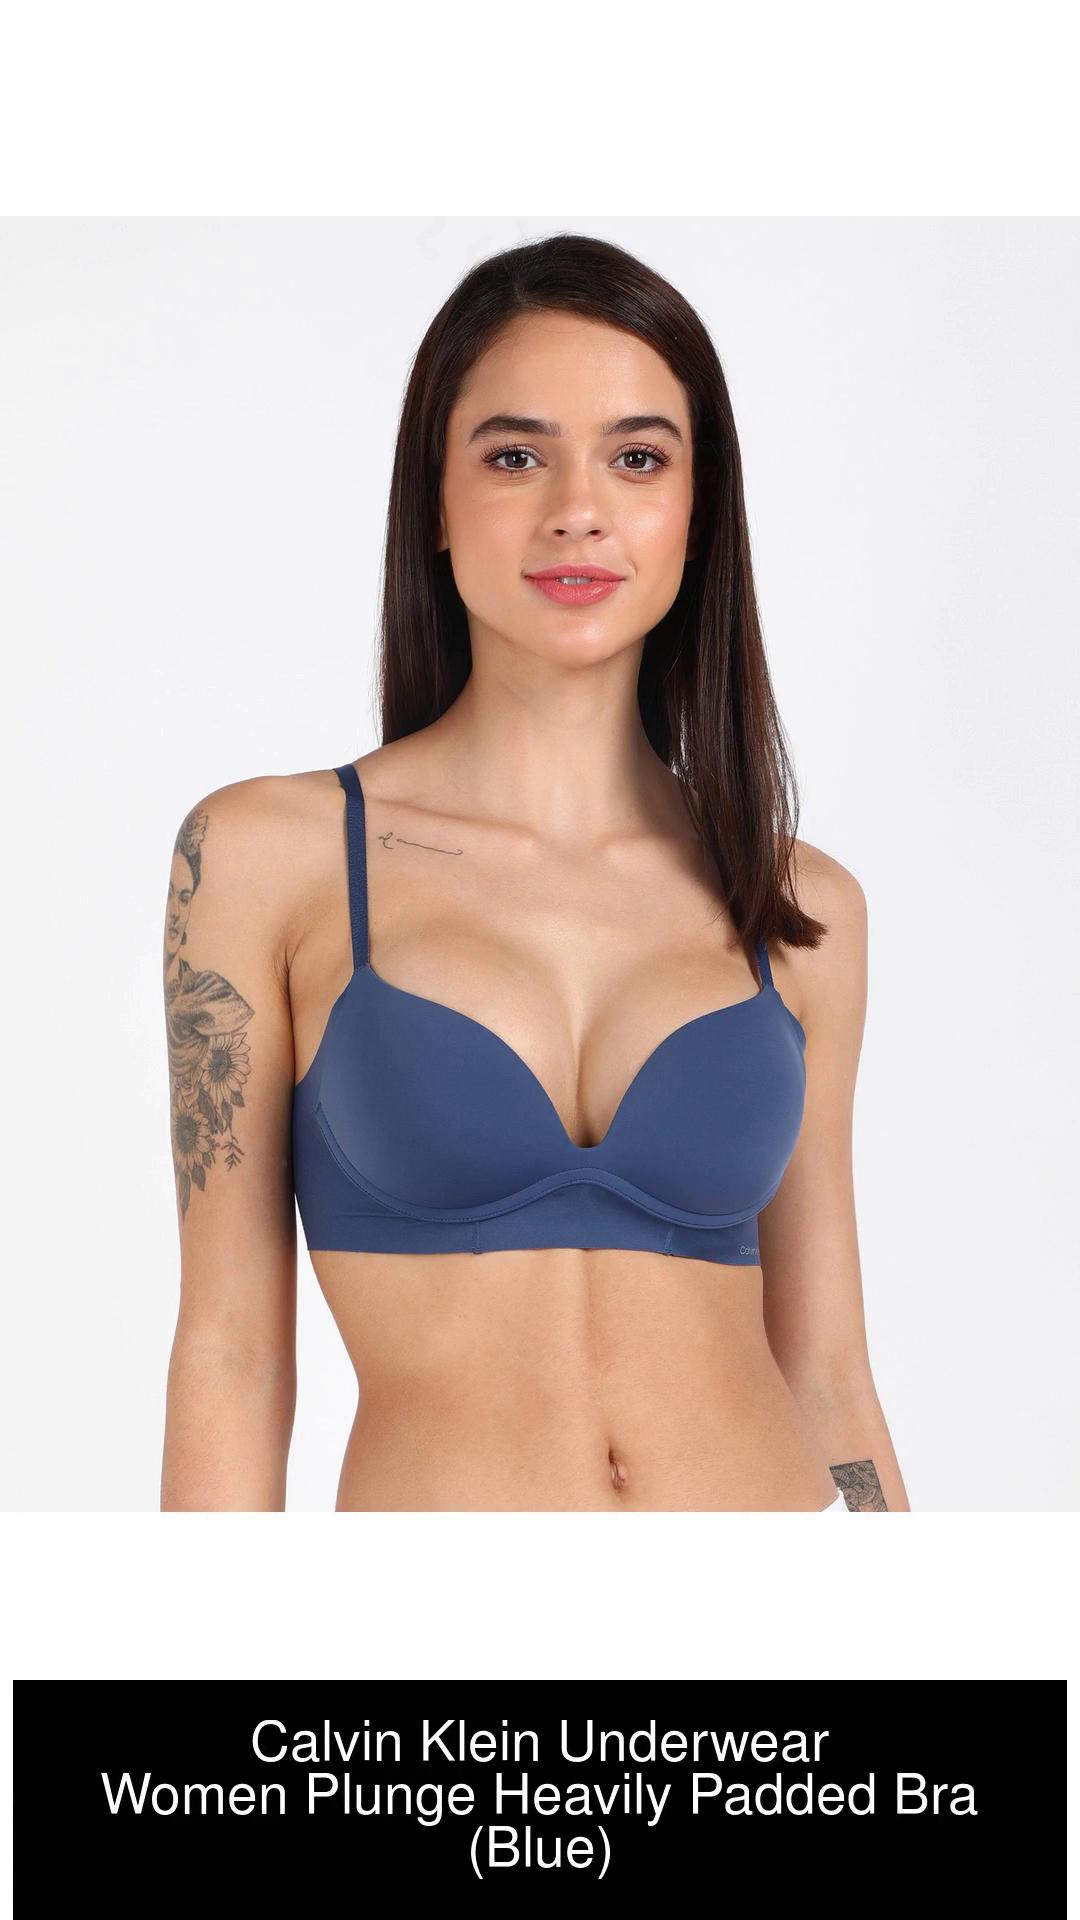 Perfectly Fit second skin plunge bra, Calvin Klein